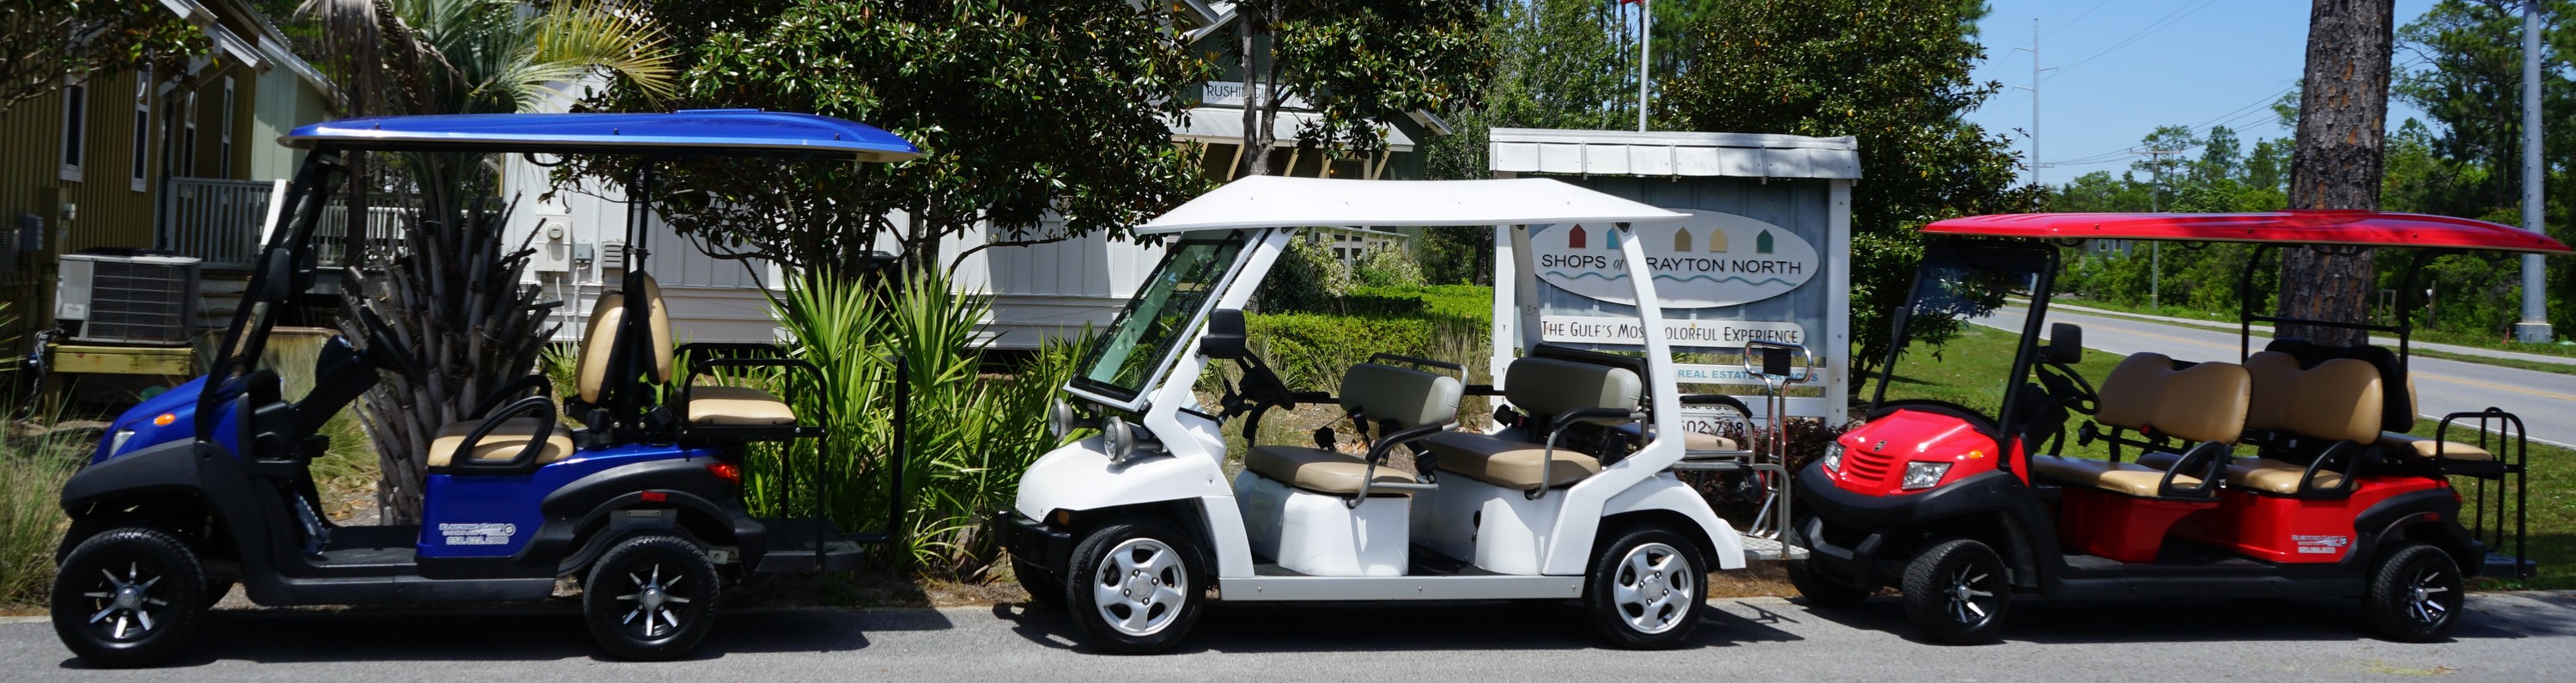 2018 Yamaha The Drive Fleet for sale in Electric Cart Company, Santa Rosa Beach, Florida